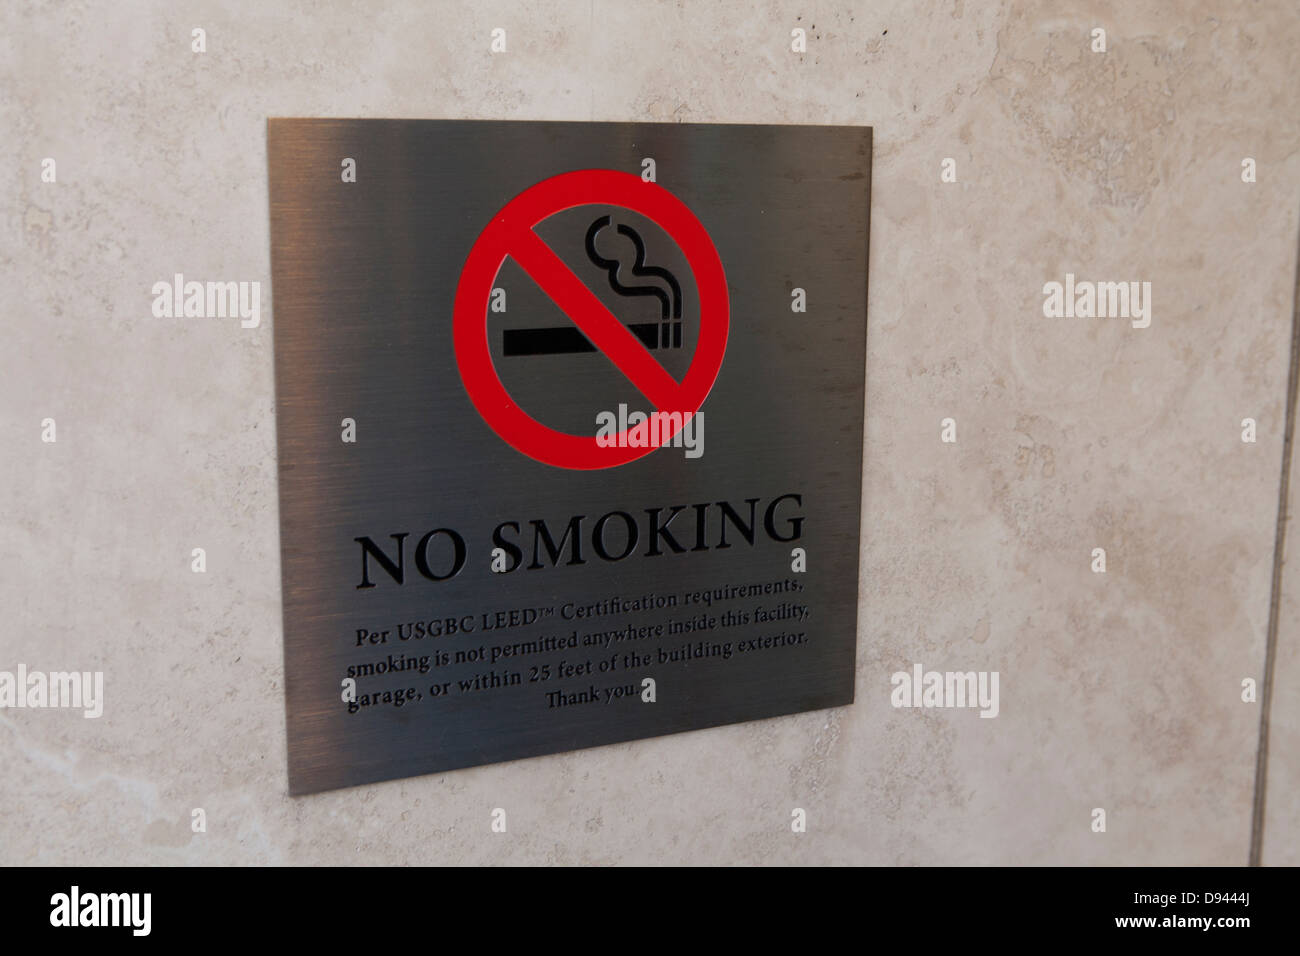 No smoking sign on building Stock Photo